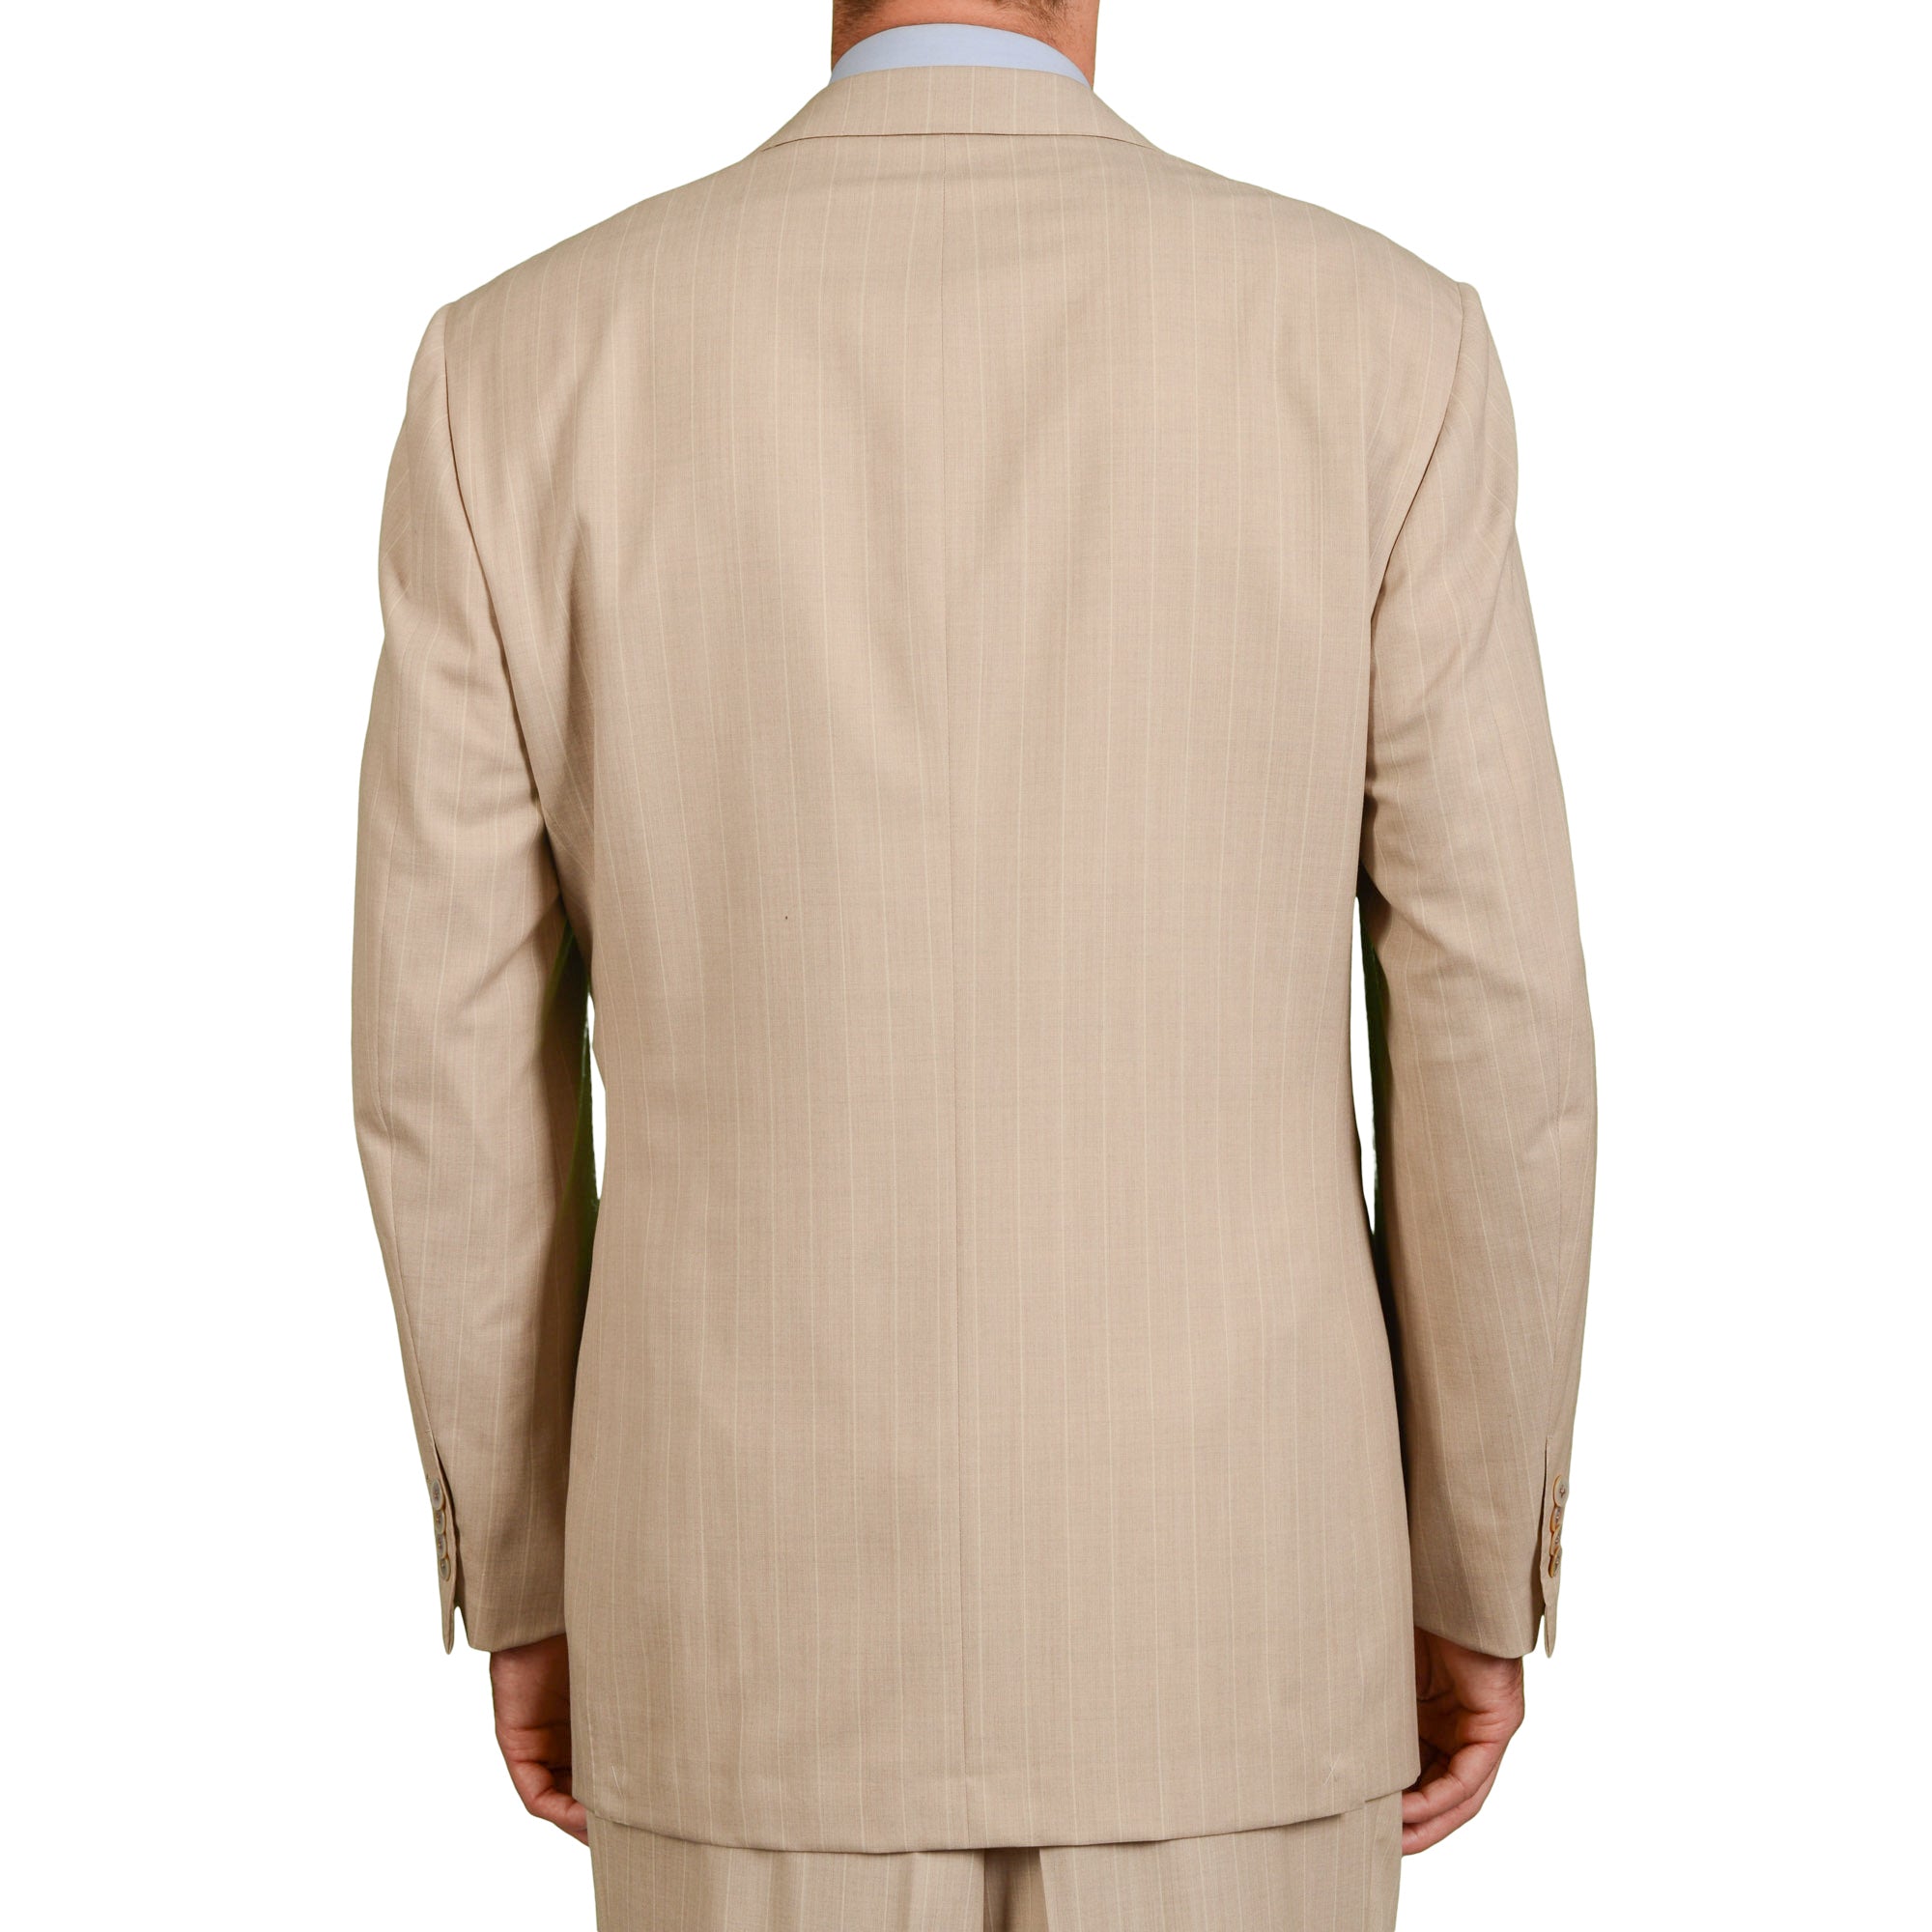 AMIR by D'AVENZA Handmade Beige Super 150’s Suit EU 54 NEW US 44 Luxury AMIR